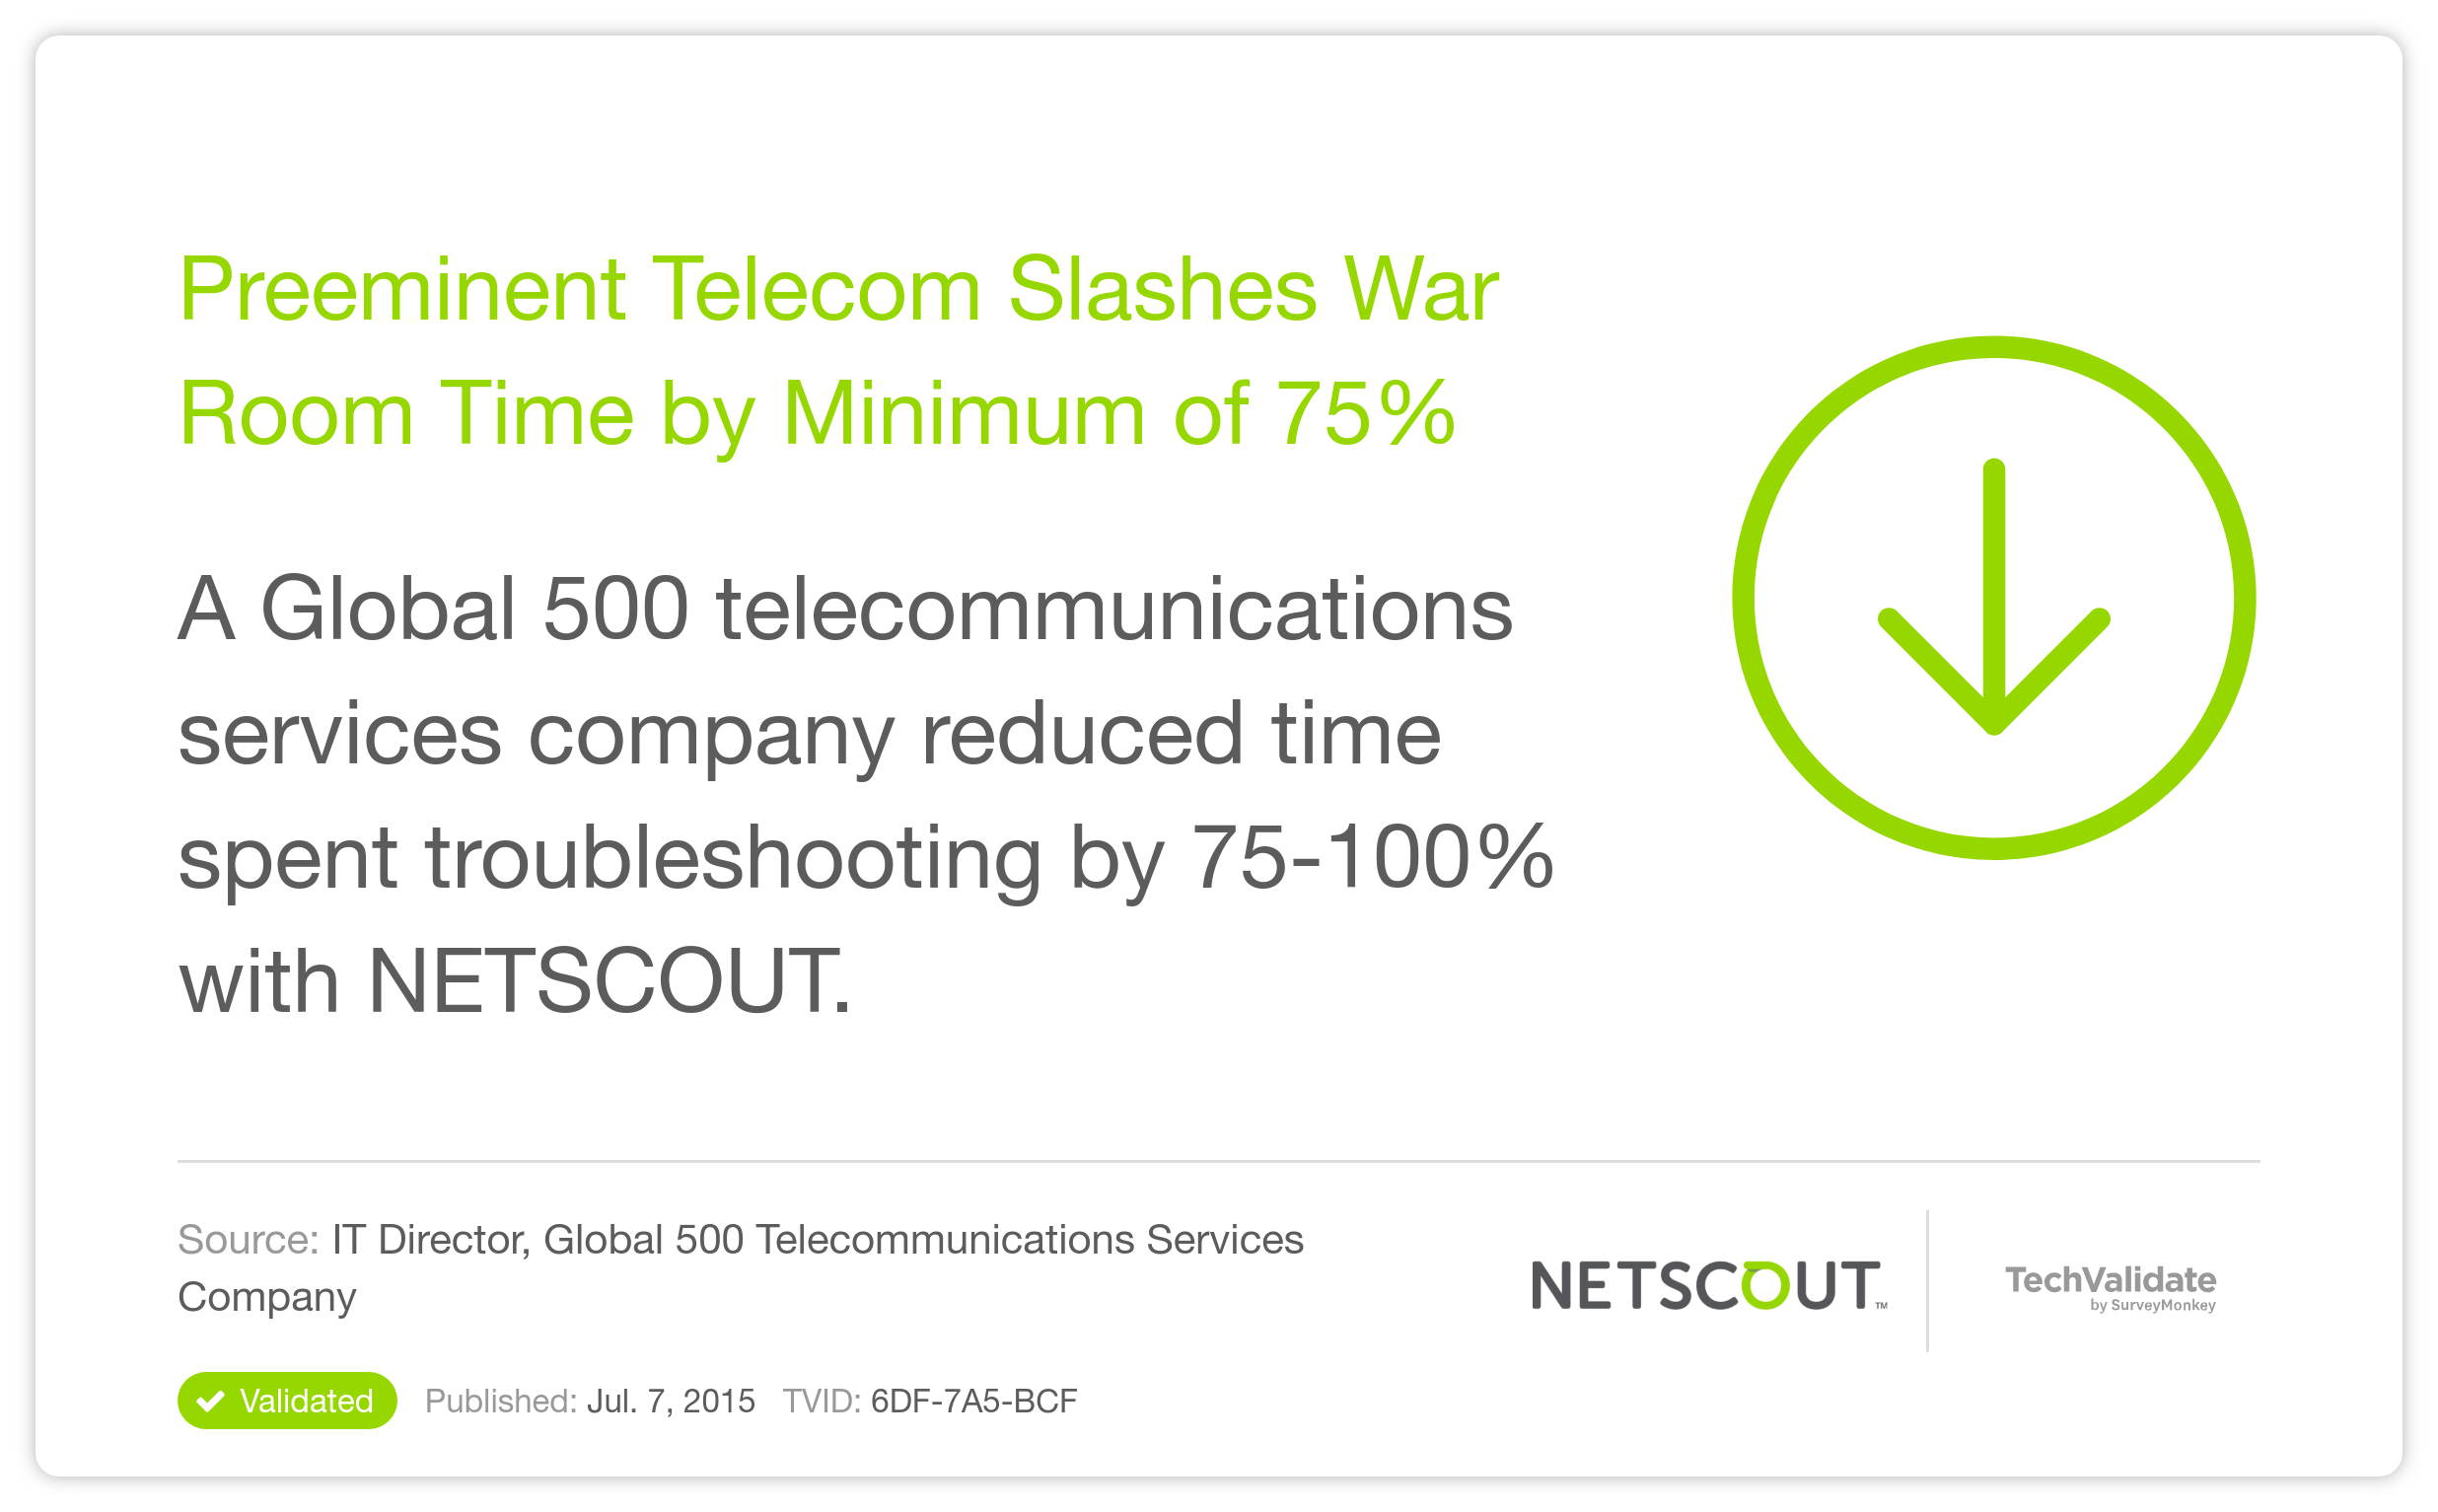 Preeminent Telecom Slashes War Room Time by Minimum of 75%